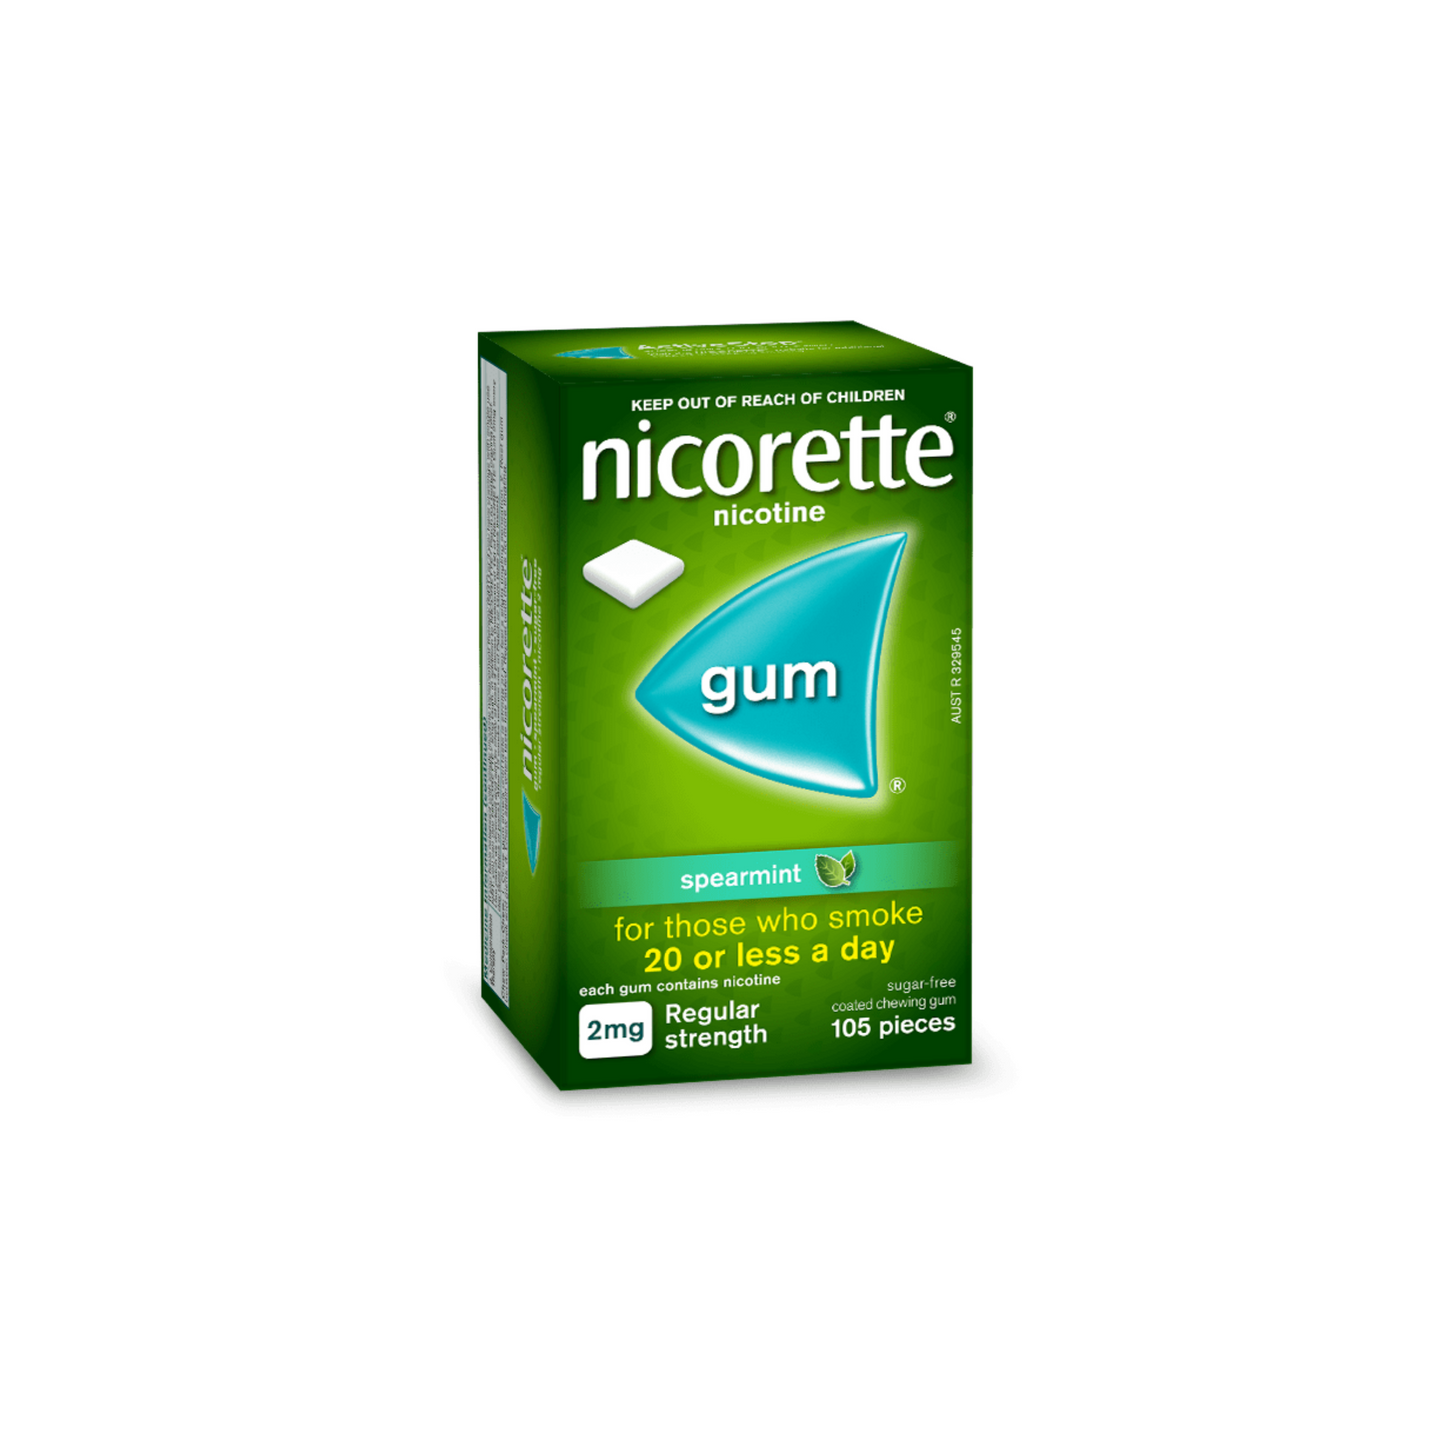 Nicorette Quit Smoking Gum 2mg Regular Strength Spearmint (105 pack)